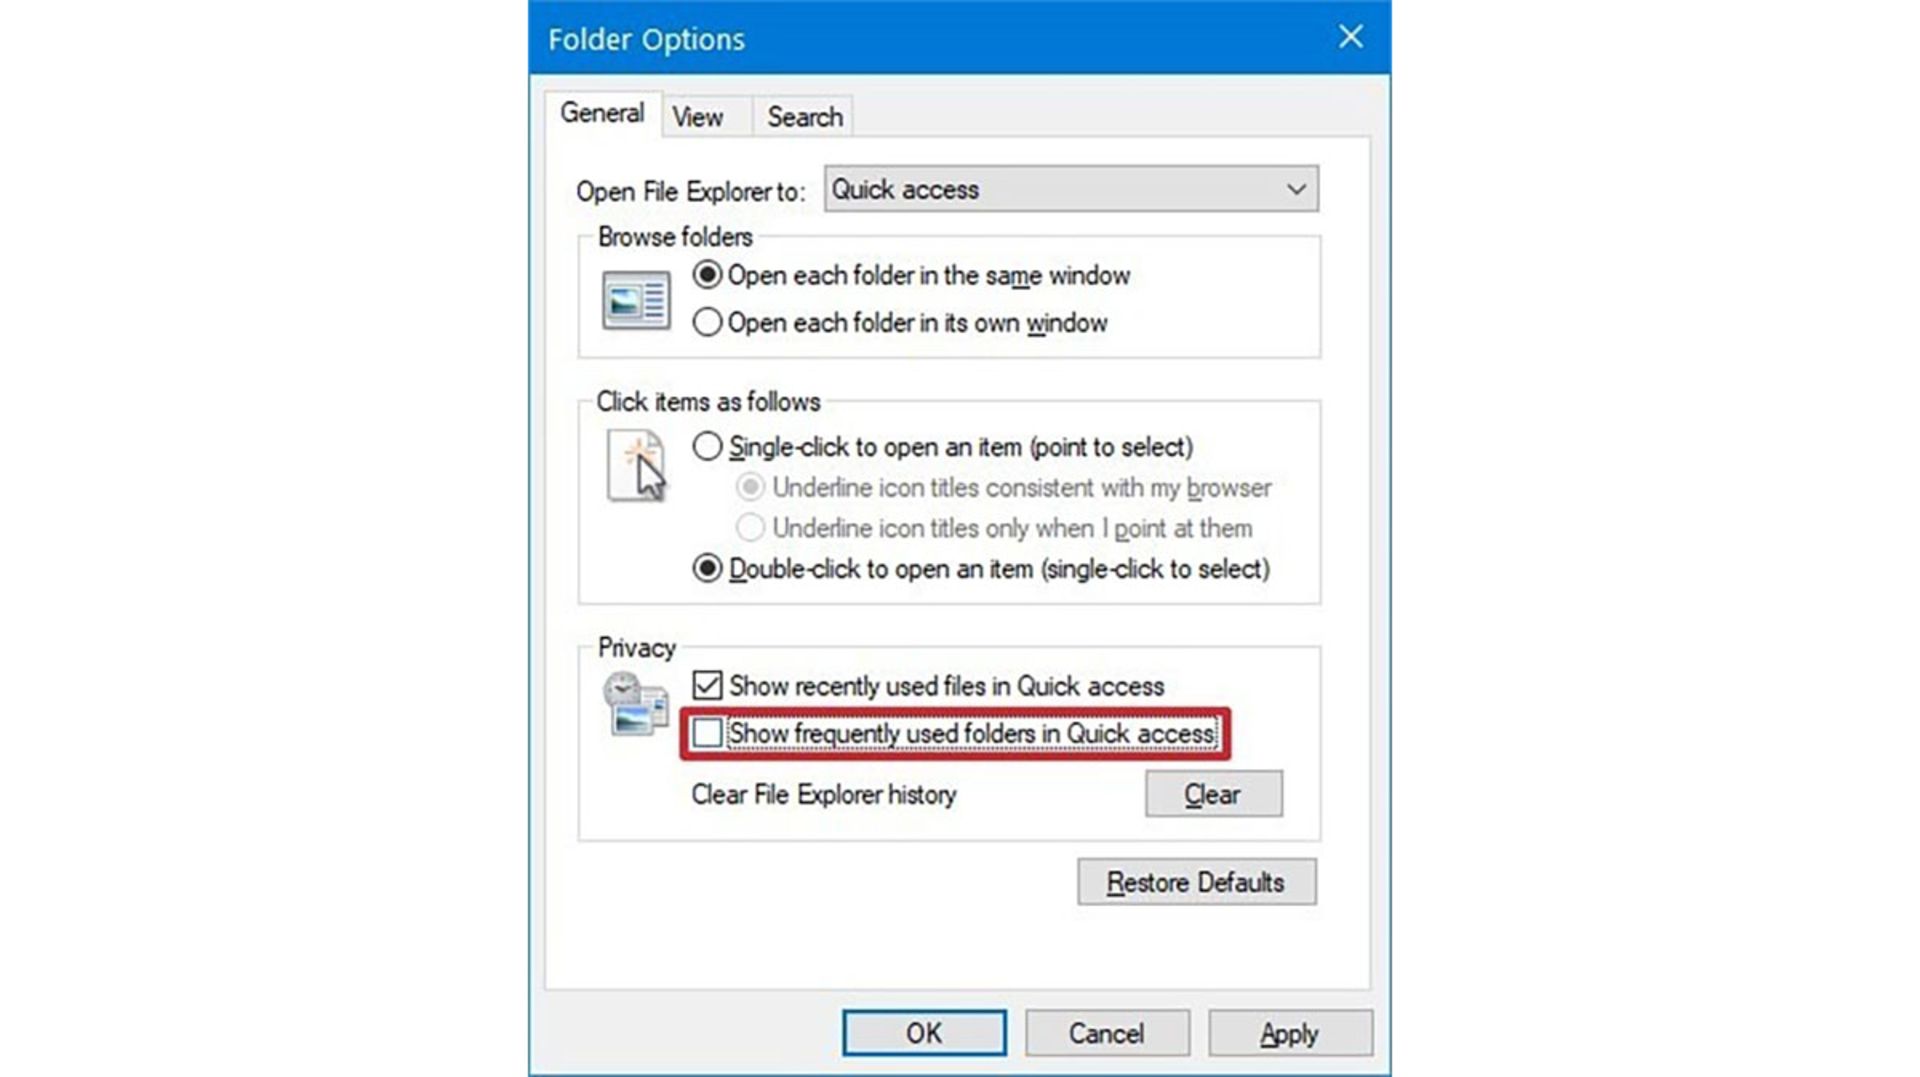 مرجع متخصصين ايران Show frequently used folders in Quick access